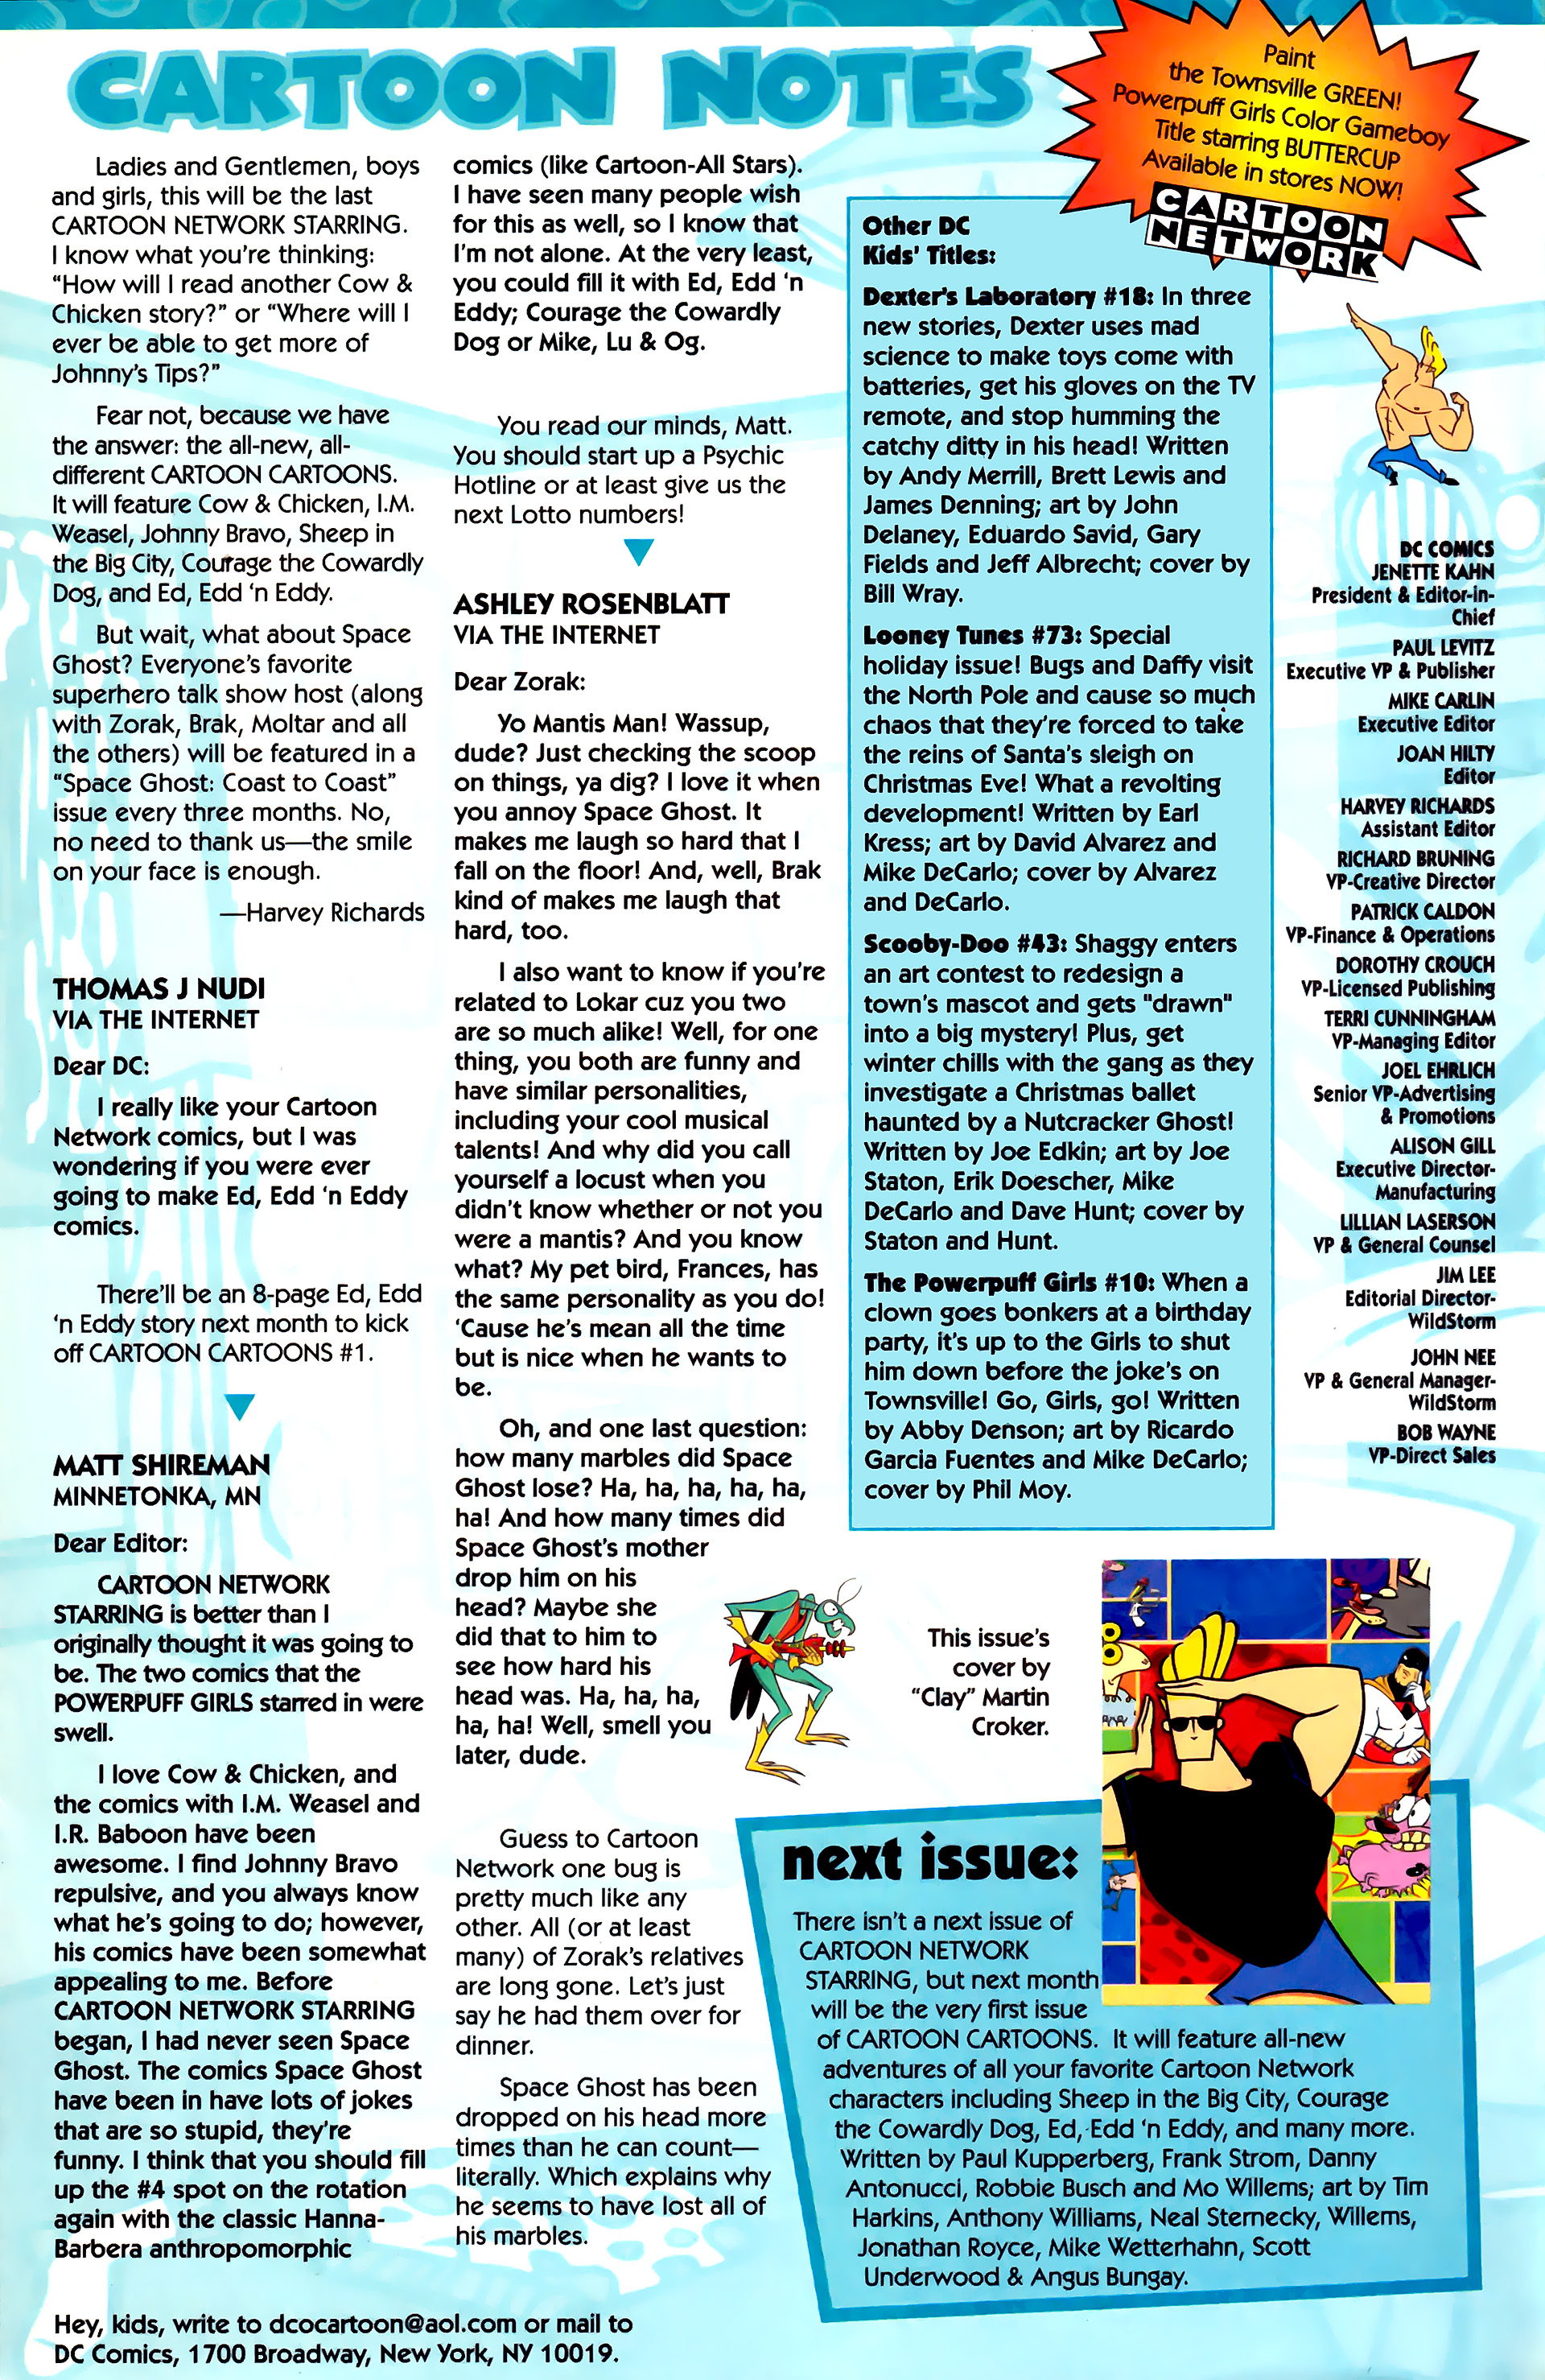 Read online Cartoon Network Starring comic -  Issue #18 - 24